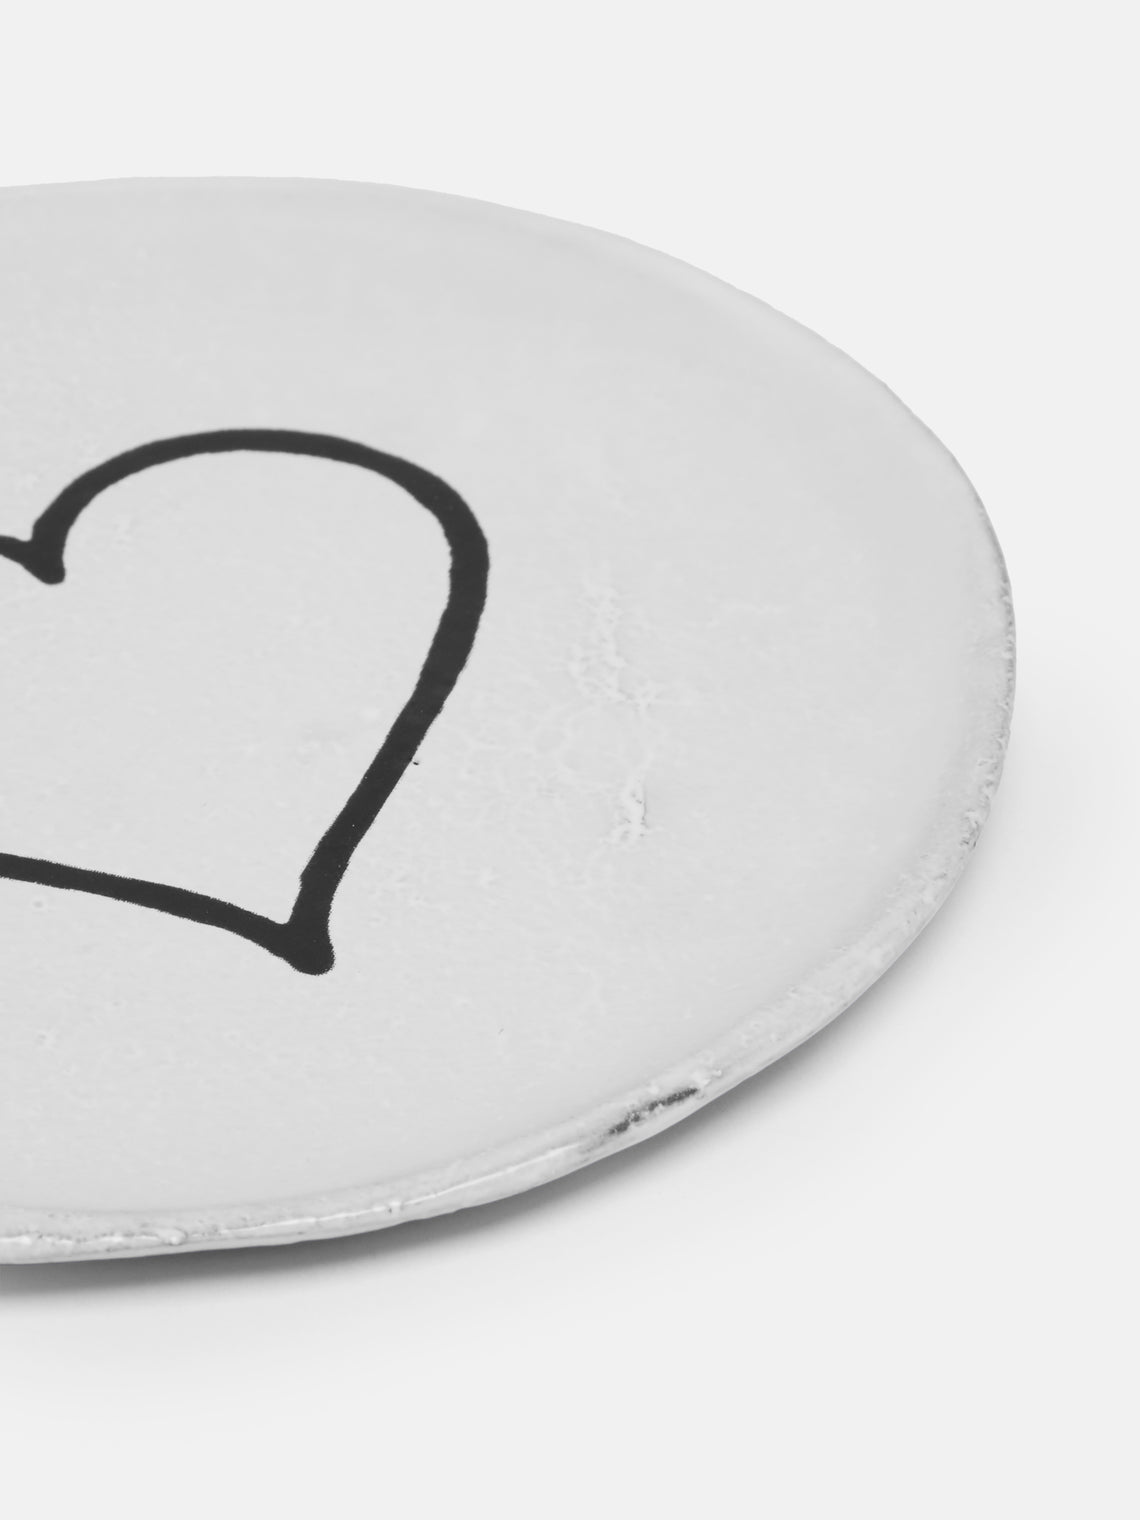 Astier de Villatte - Line Heart Small Plate -  - ABASK